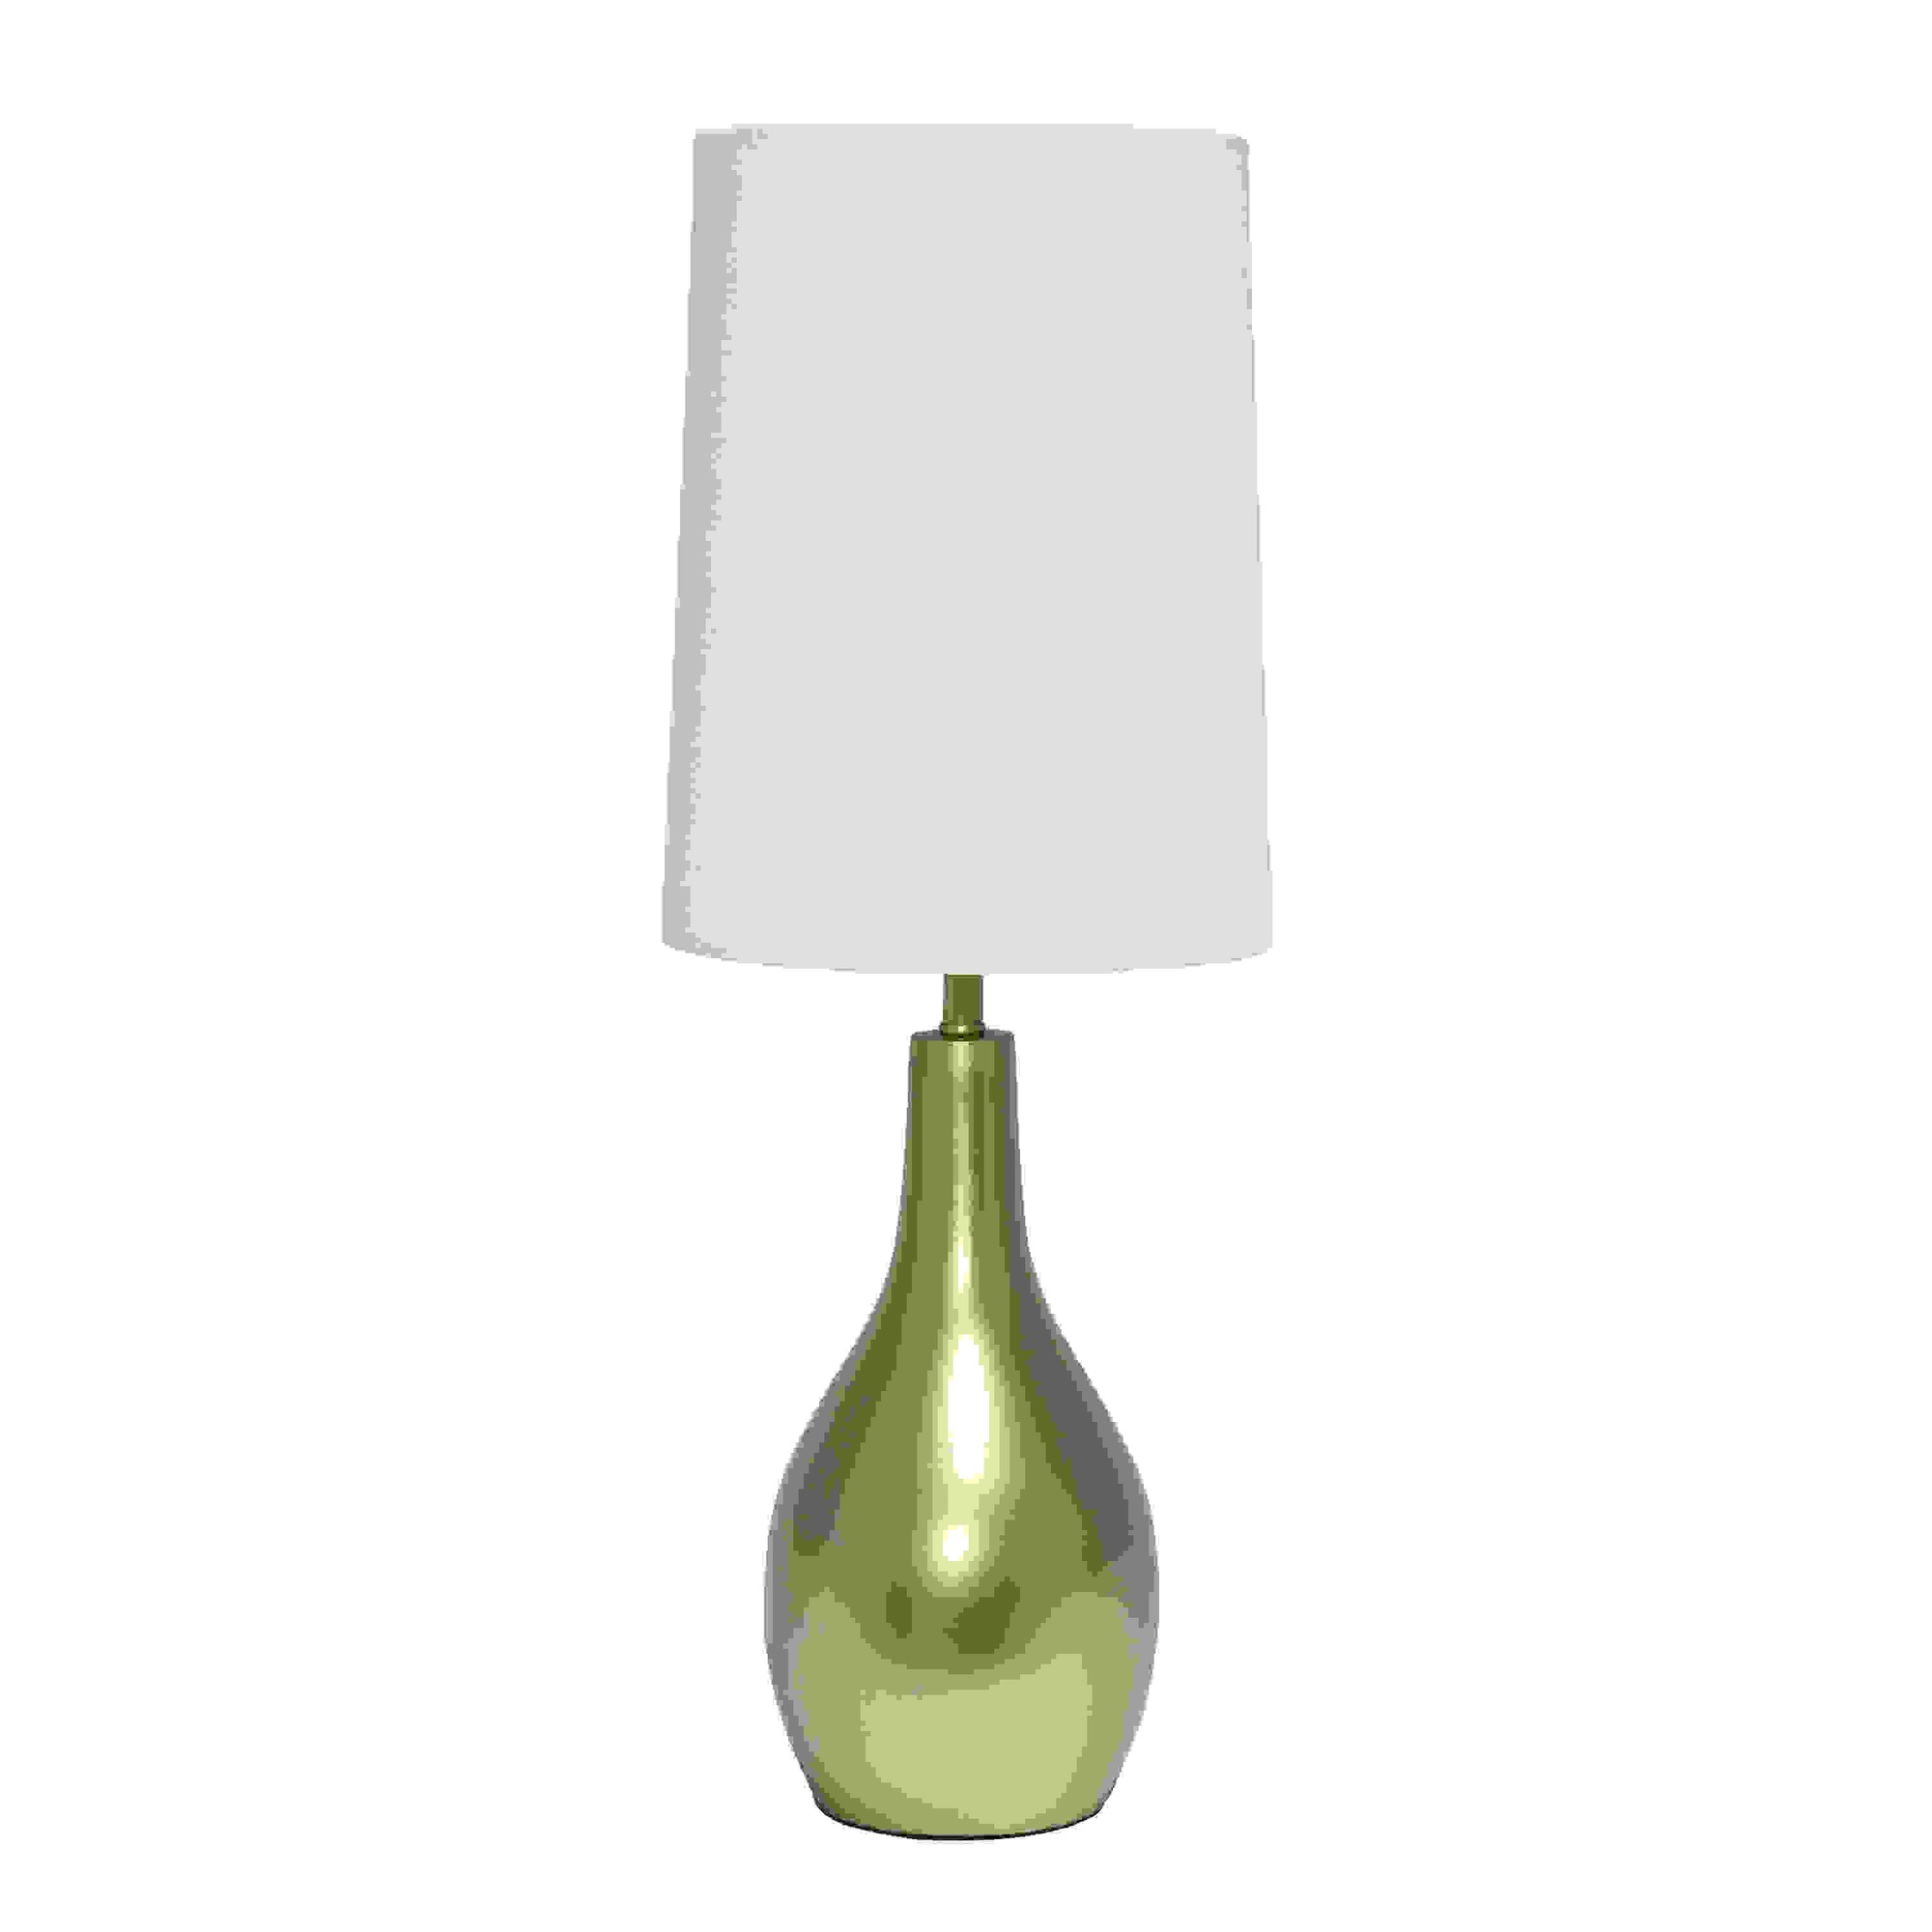 Simple Designs 1 Light Tear Drop Table Lamp, Gold